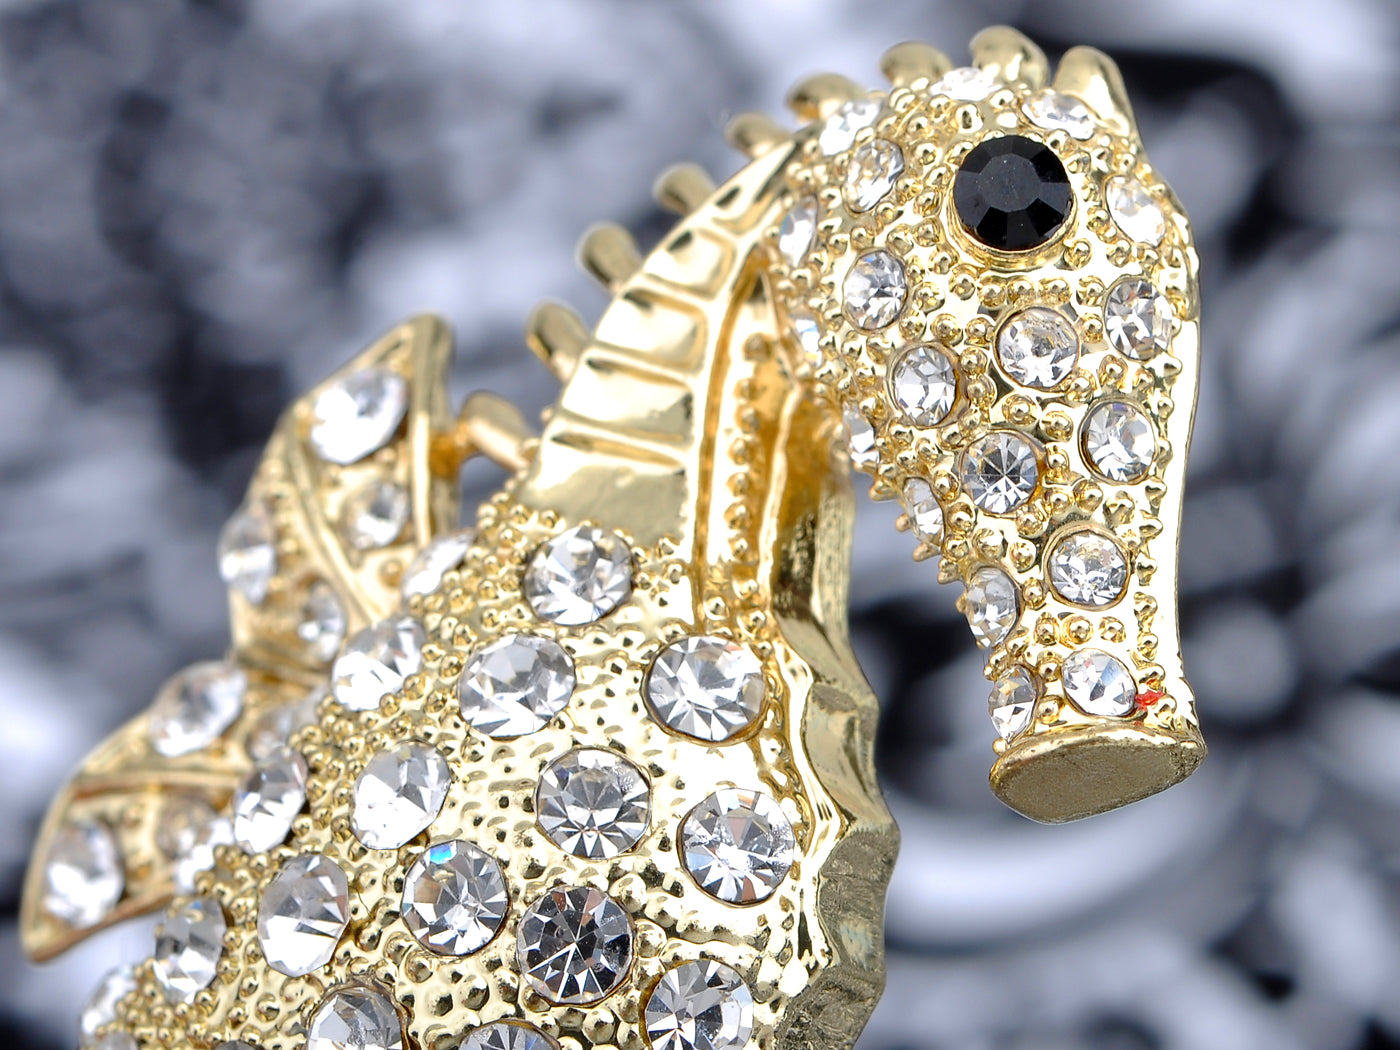 Seahorse Sea Creature Brooch Pin Jewelry